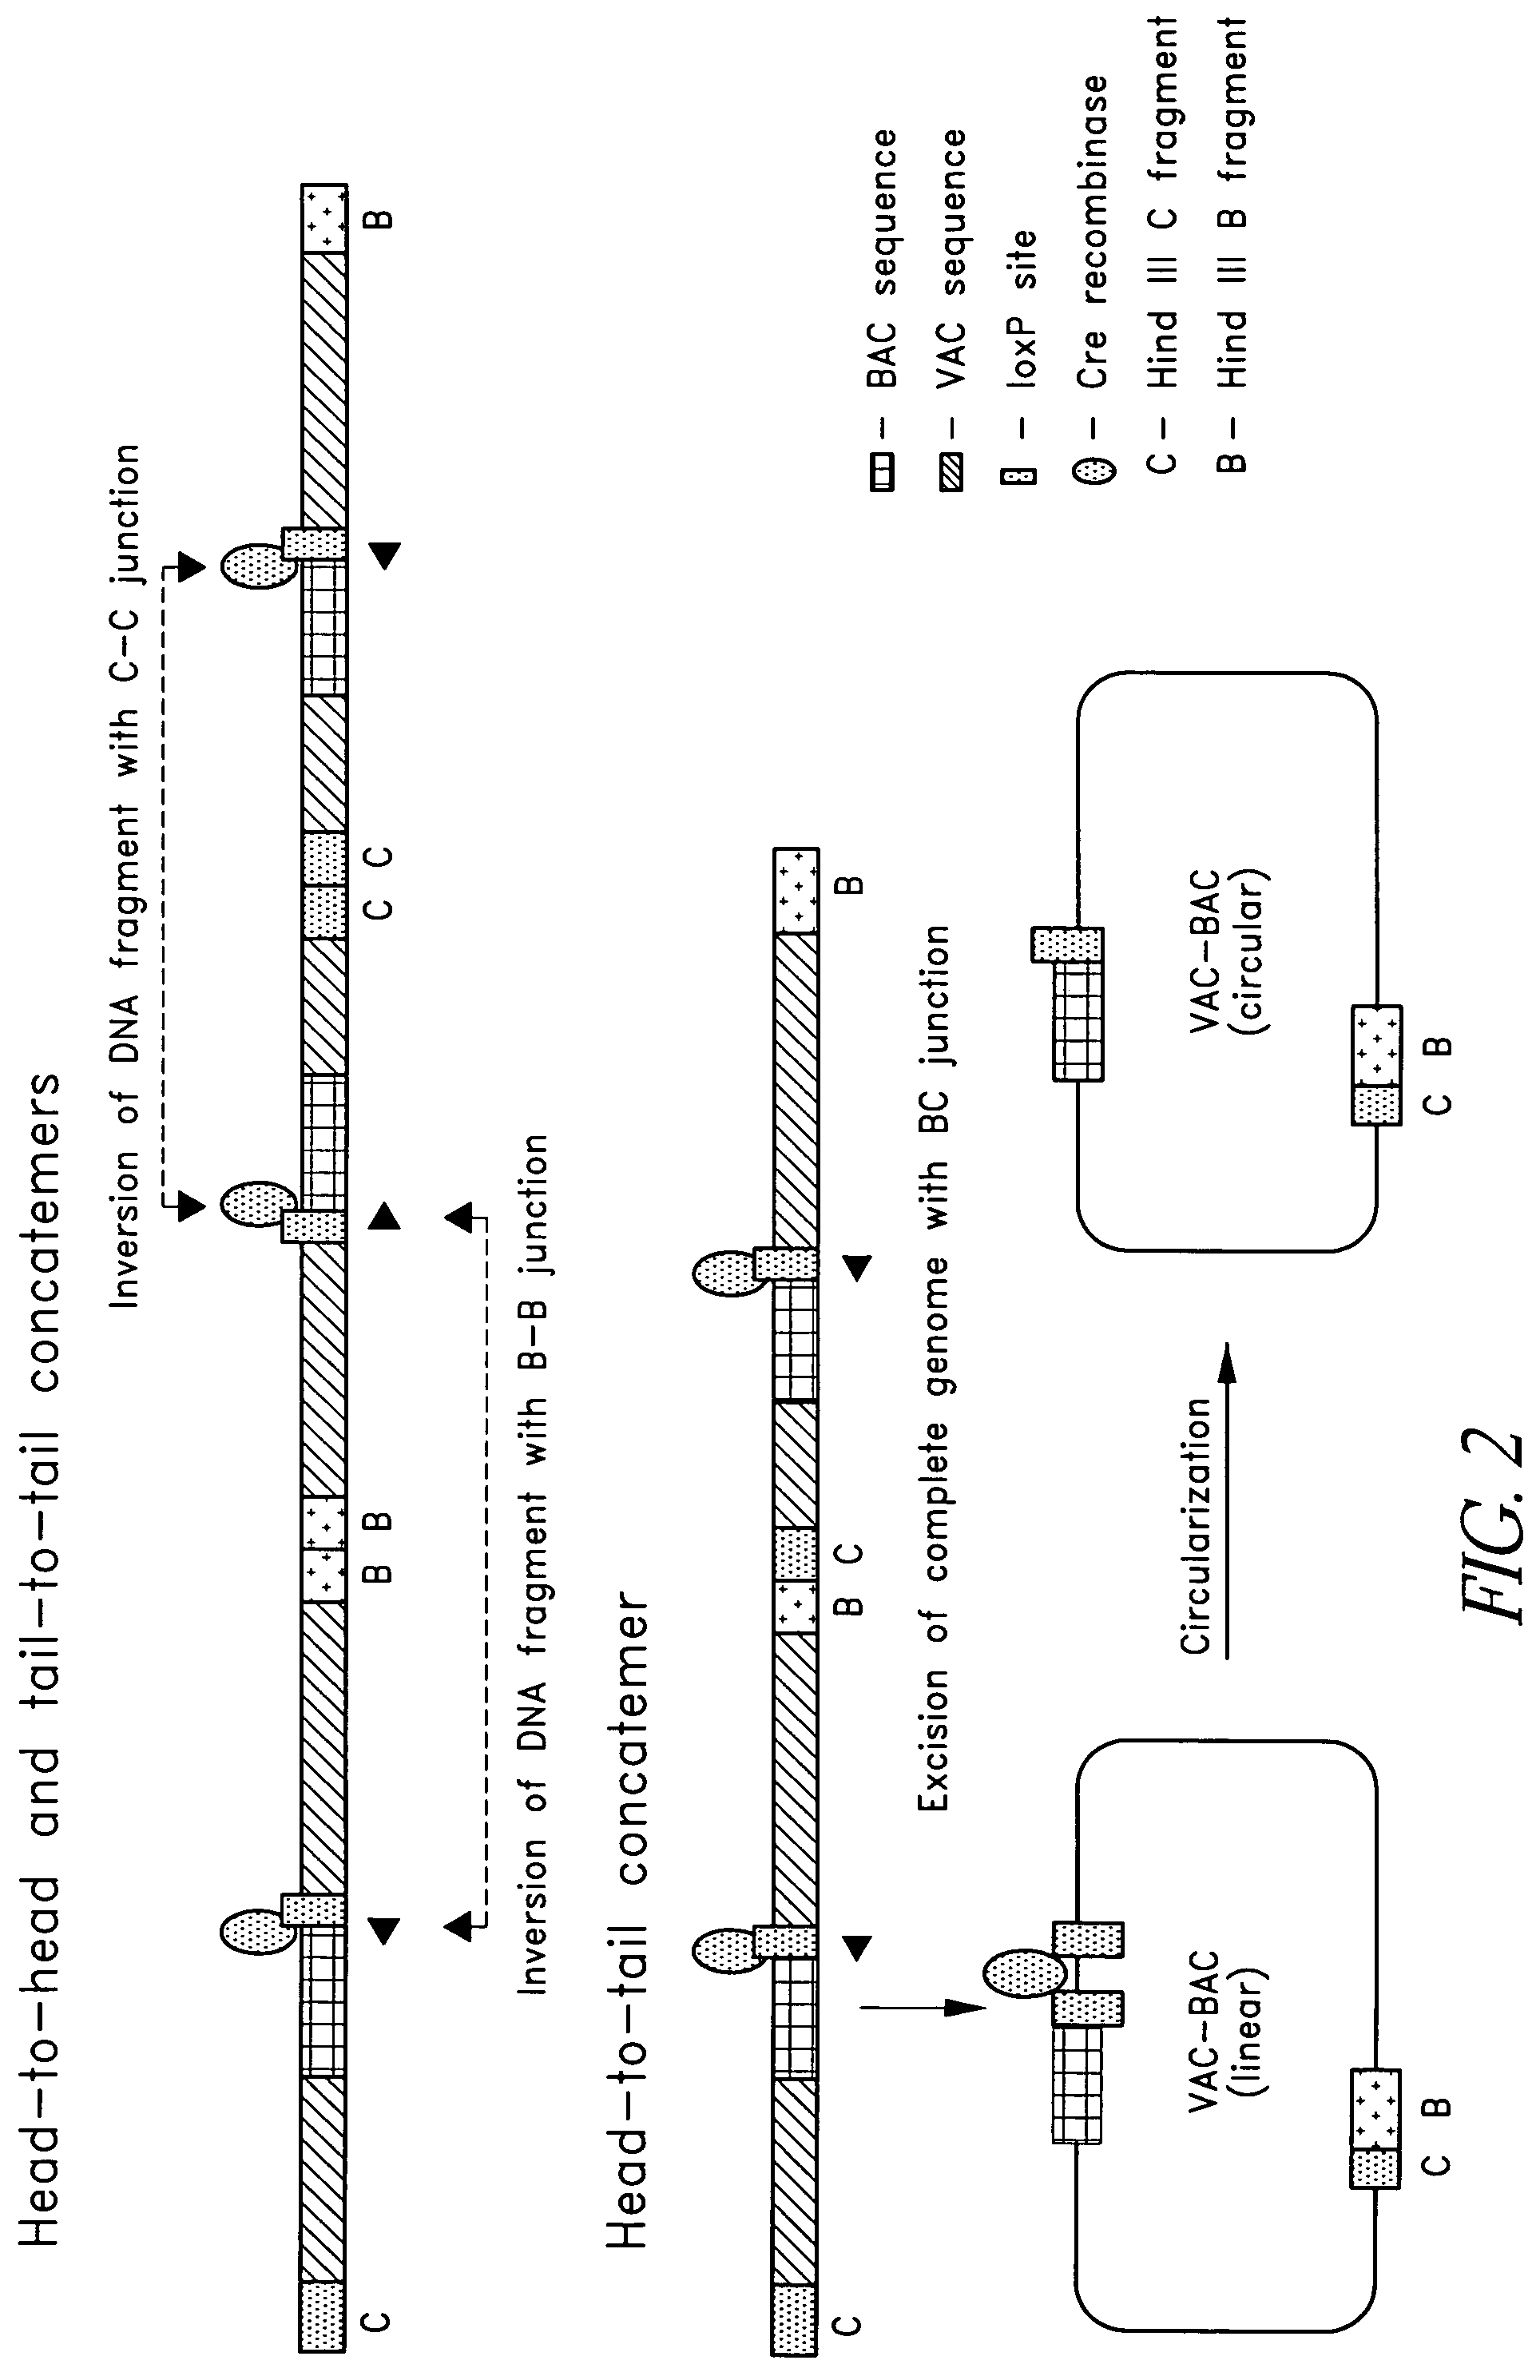 VAC-BAC shuttle vector system